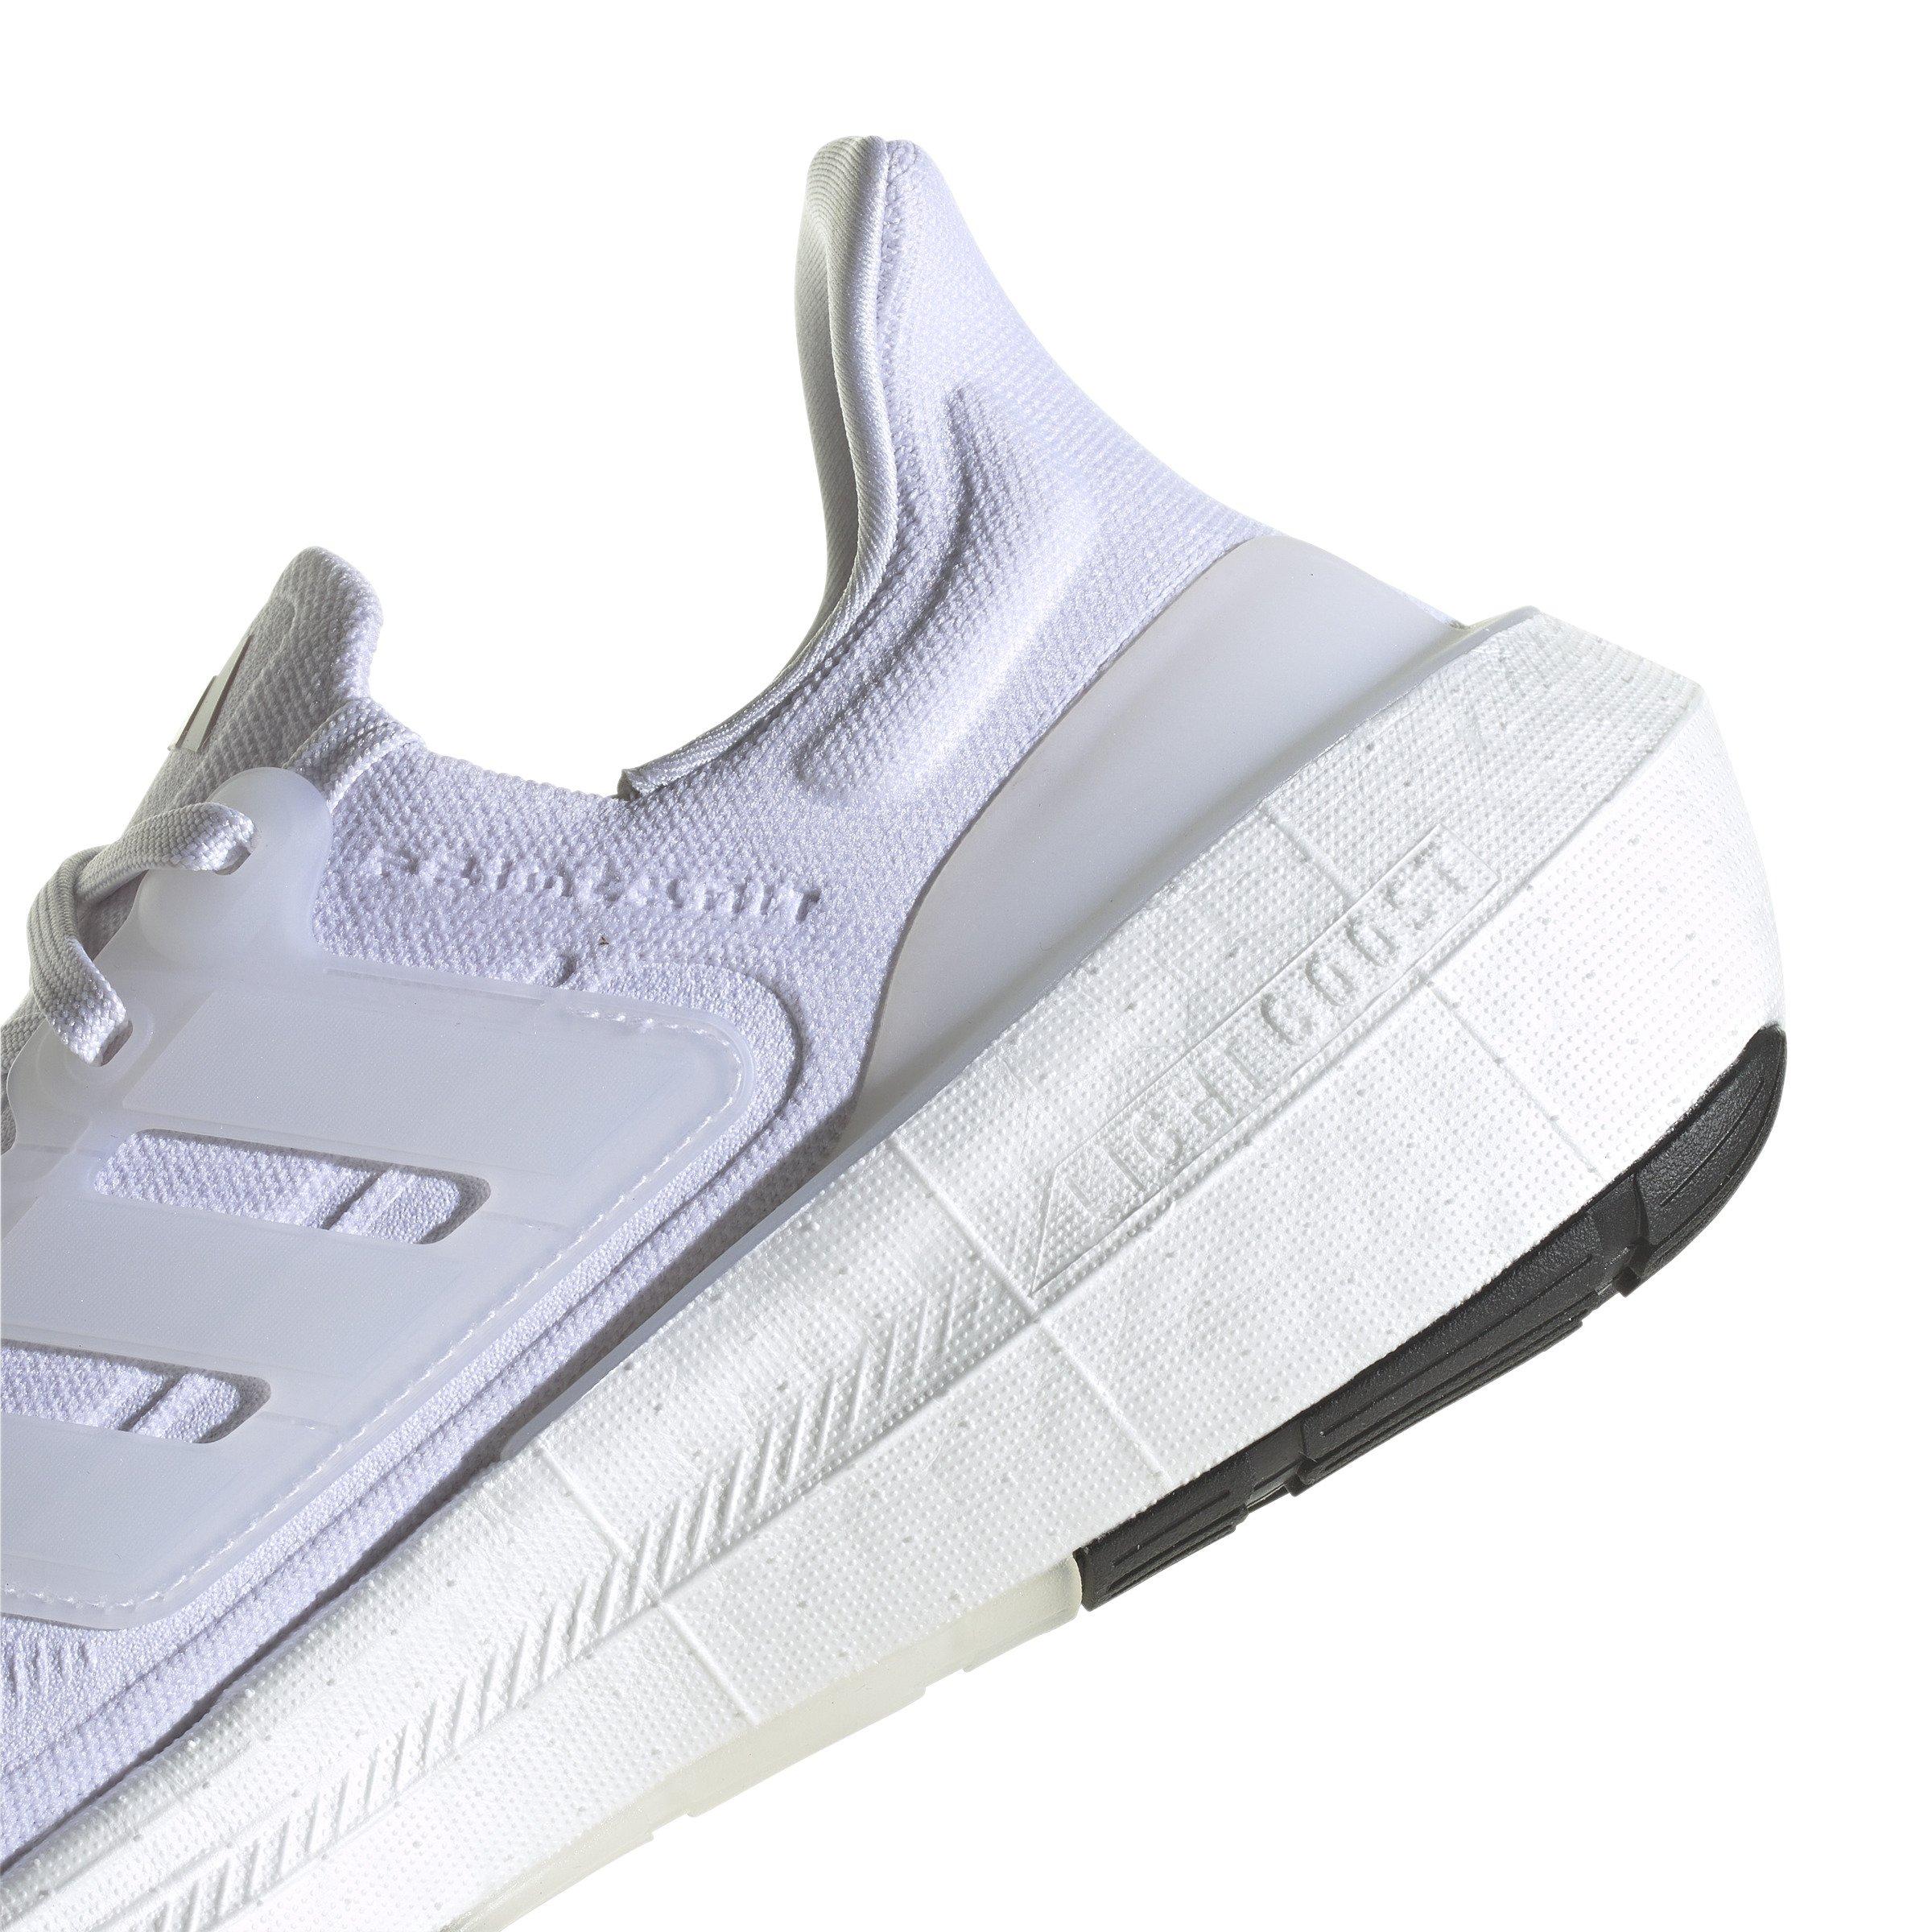 Voorkeursbehandeling Inconsistent Bermad adidas Ultraboost Light "Ftwr White/Ftwr White/Crystal White" Unisex  Running Shoe